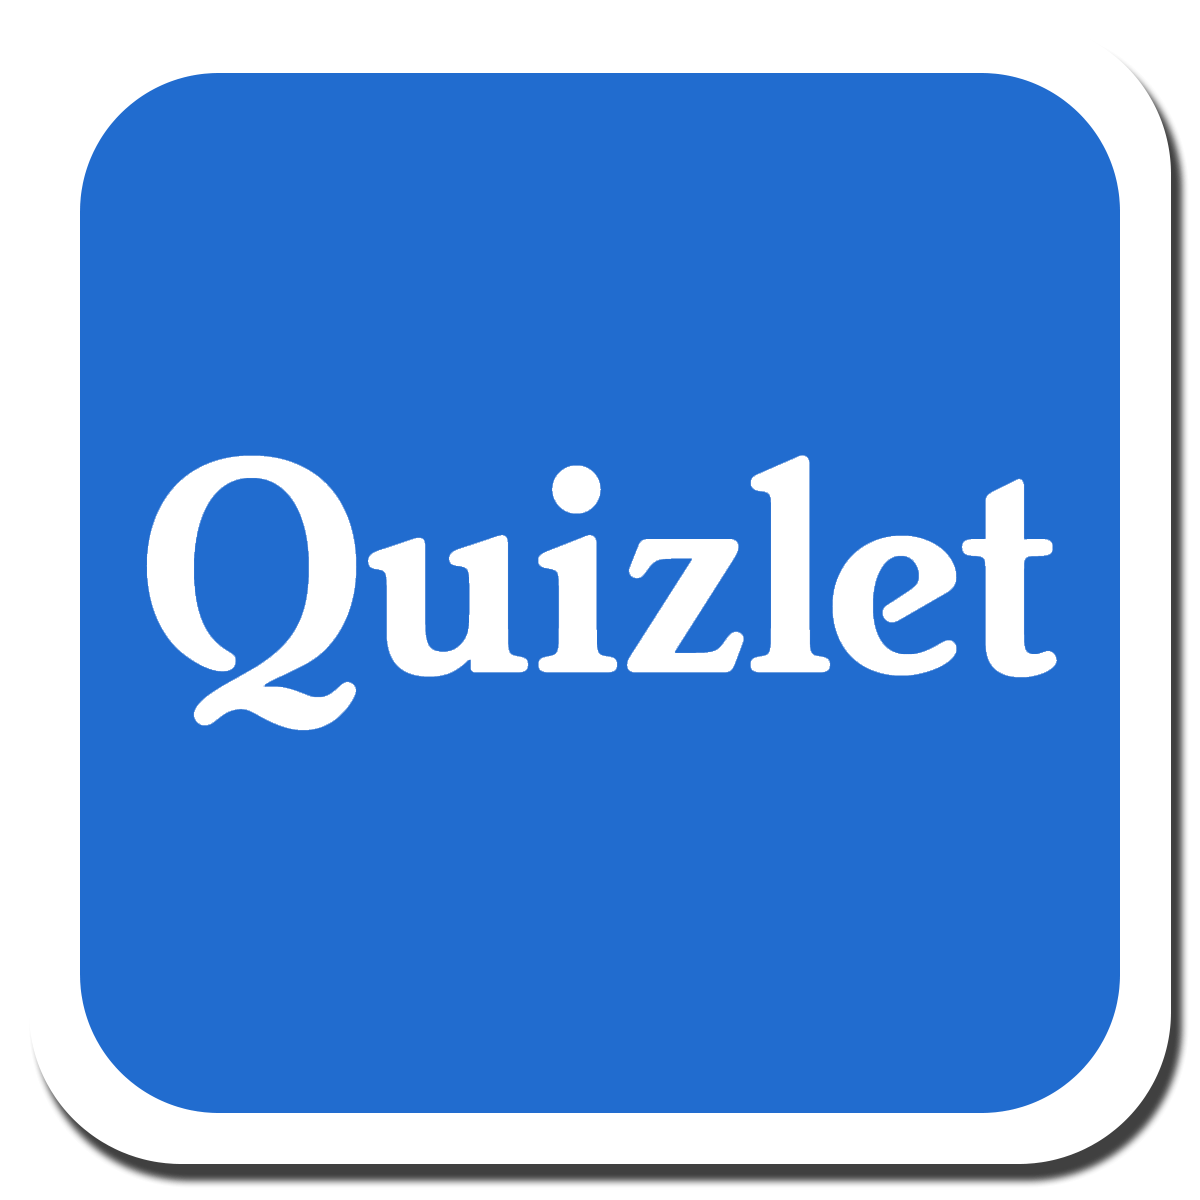 quizlet logo